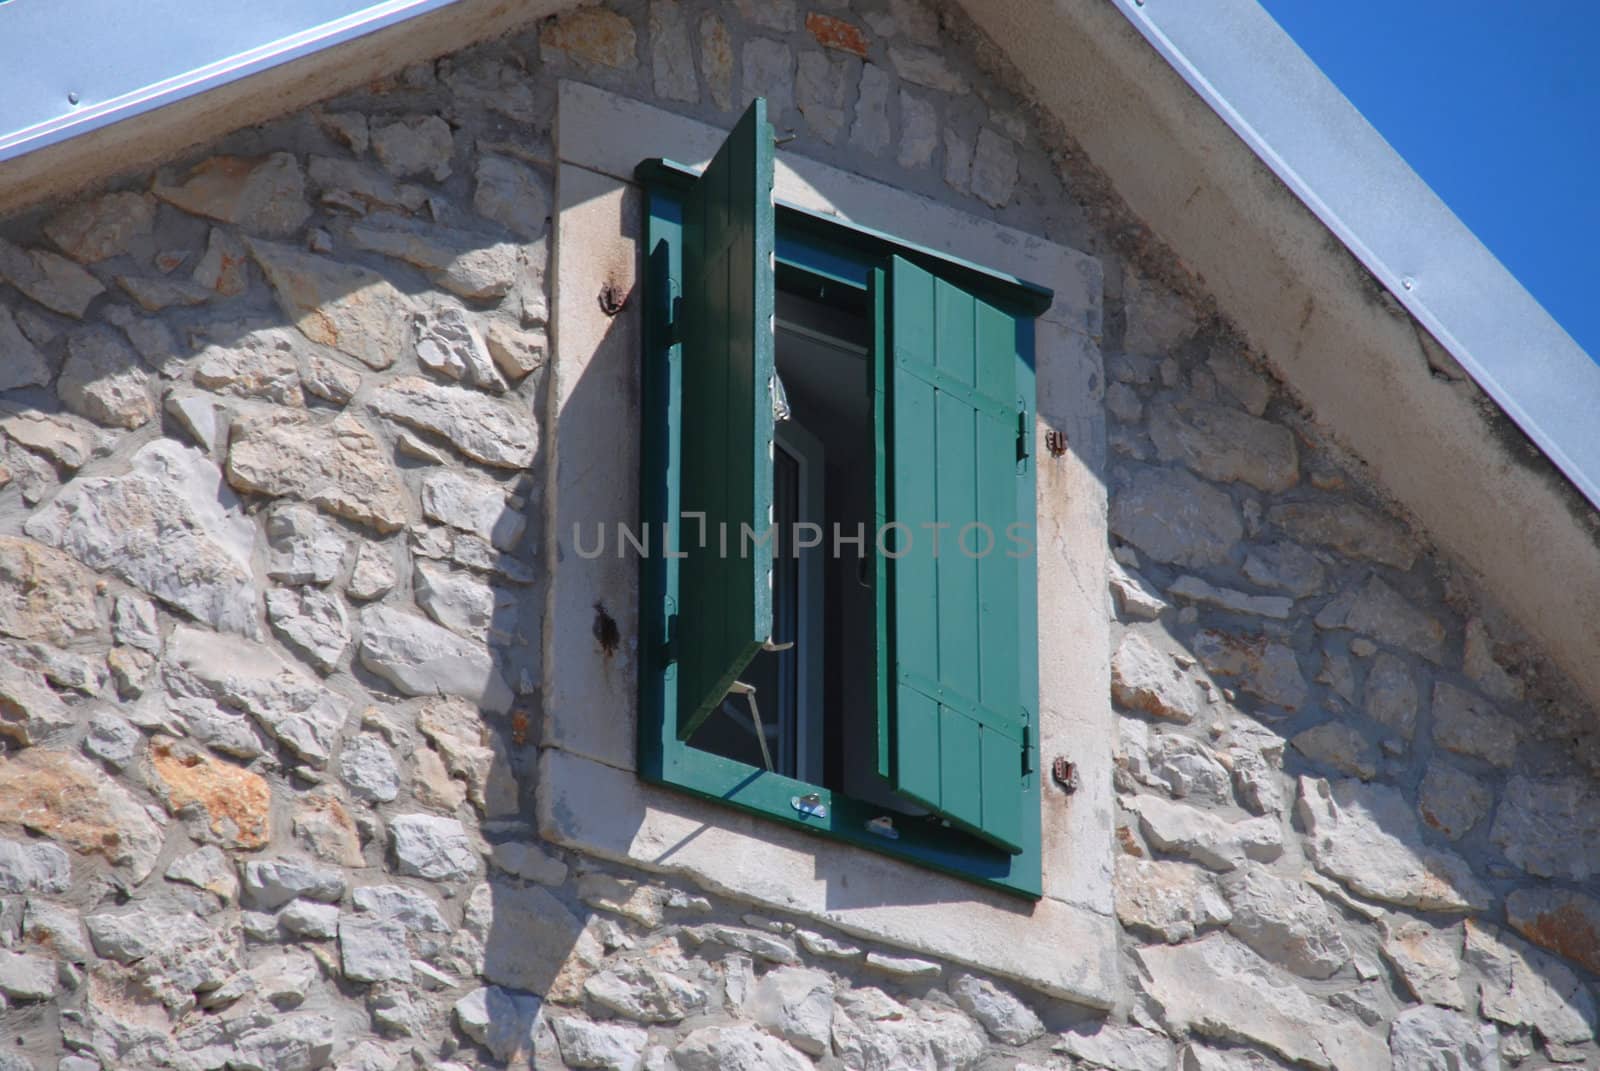 The open green shutter in the window. Croatia, Vodice.